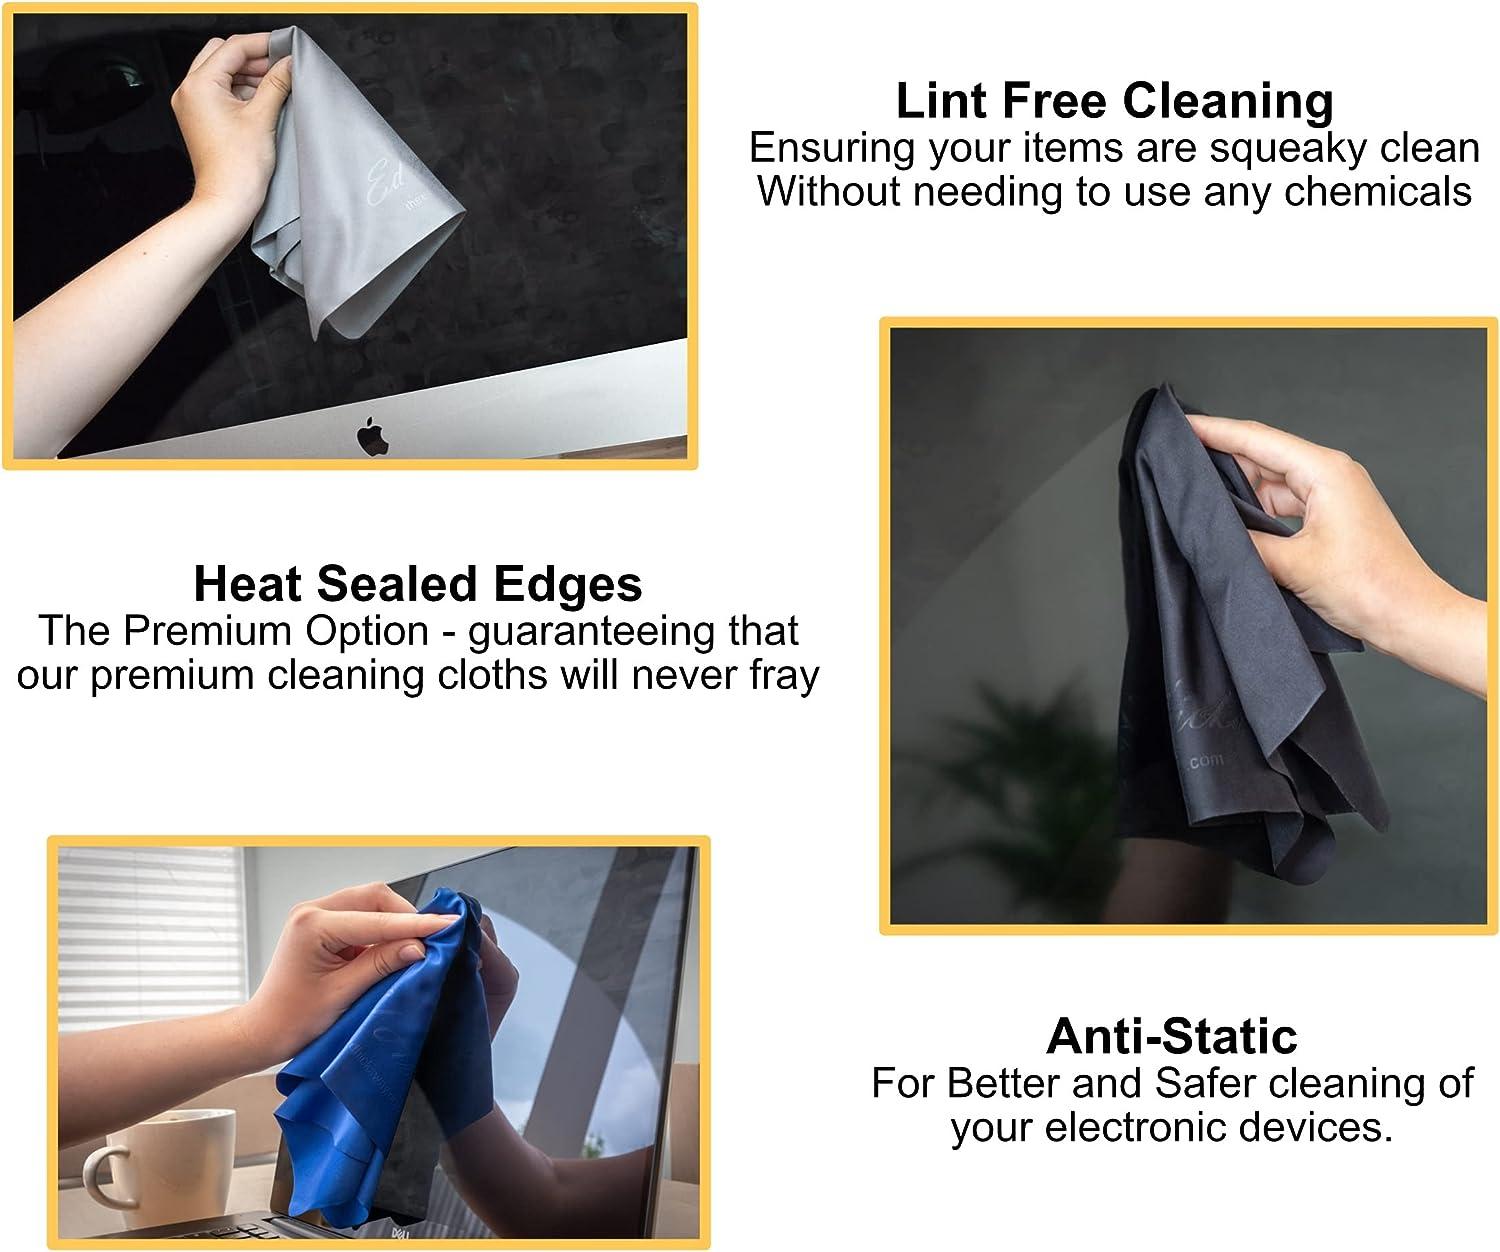 Custom Screen Cleaning Cloth